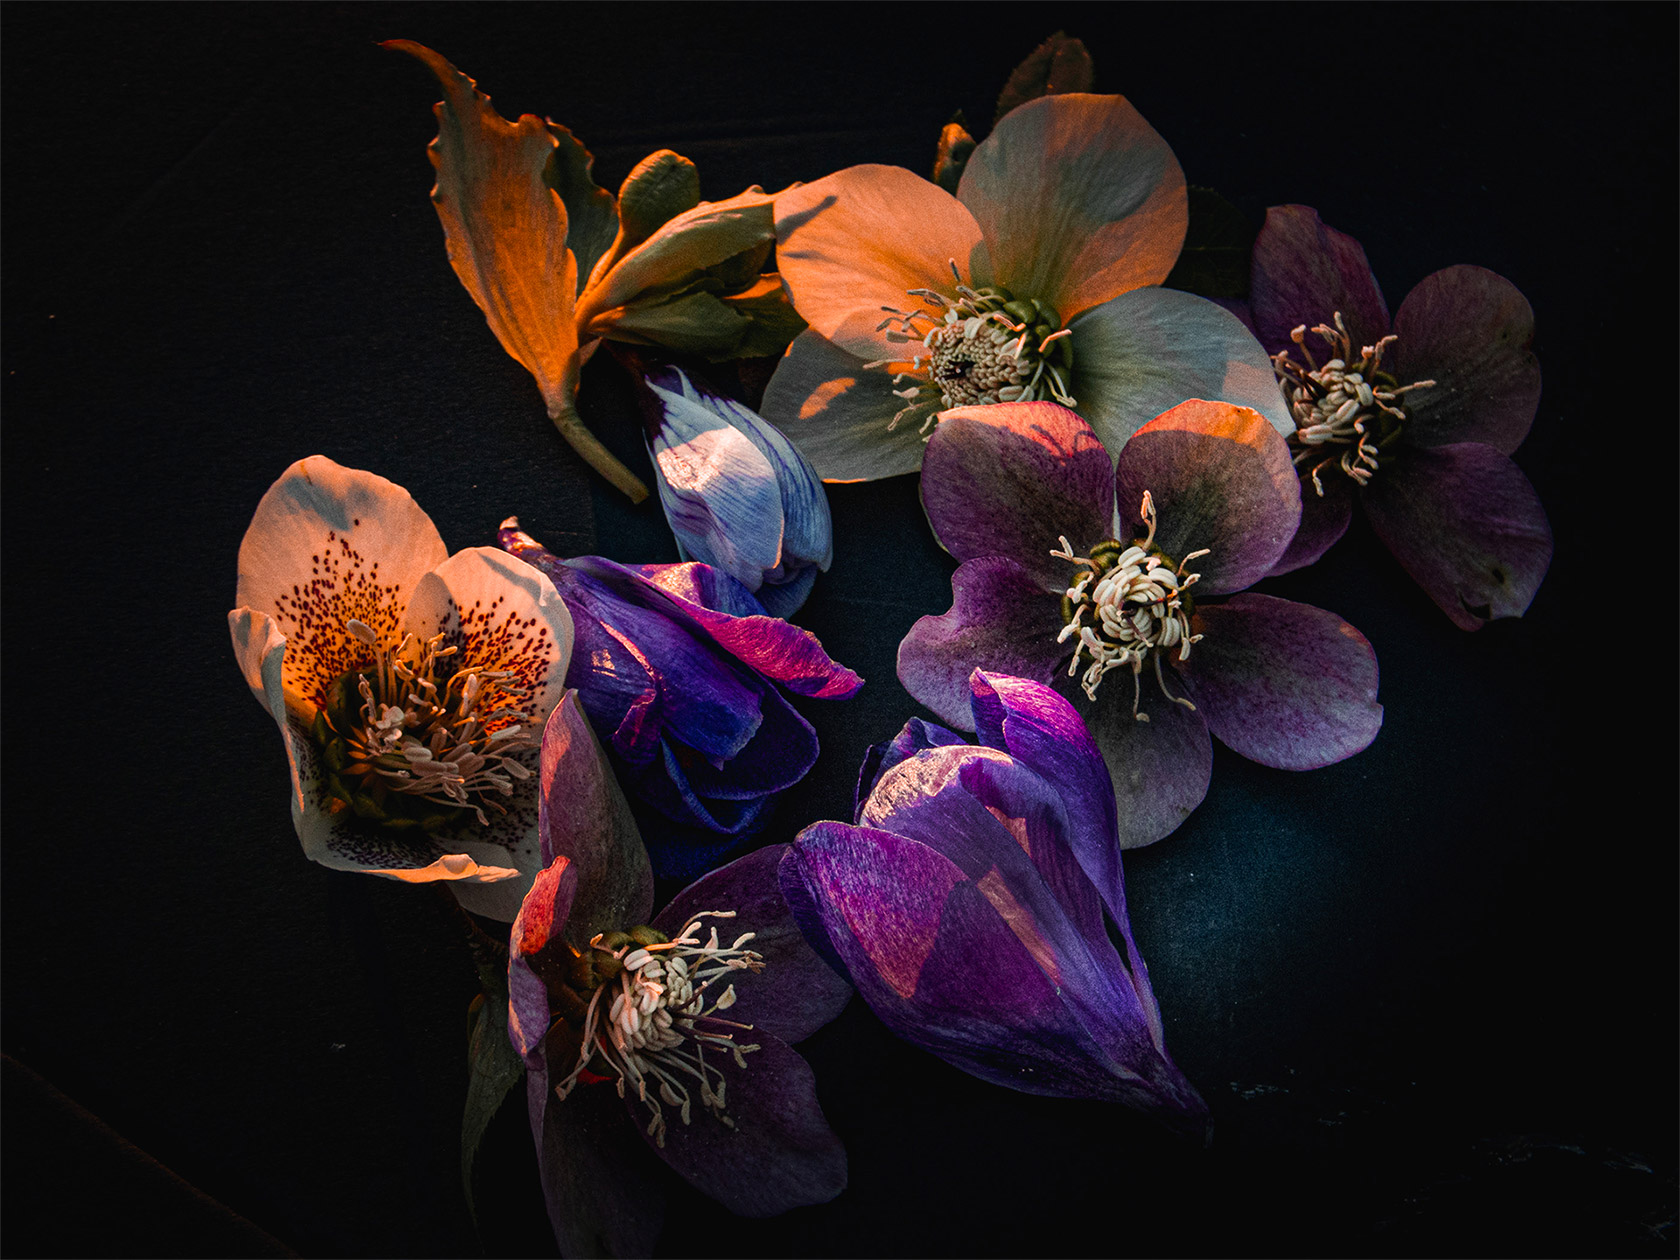 Katarzyna Mrozewska艺术花卉摄影作品